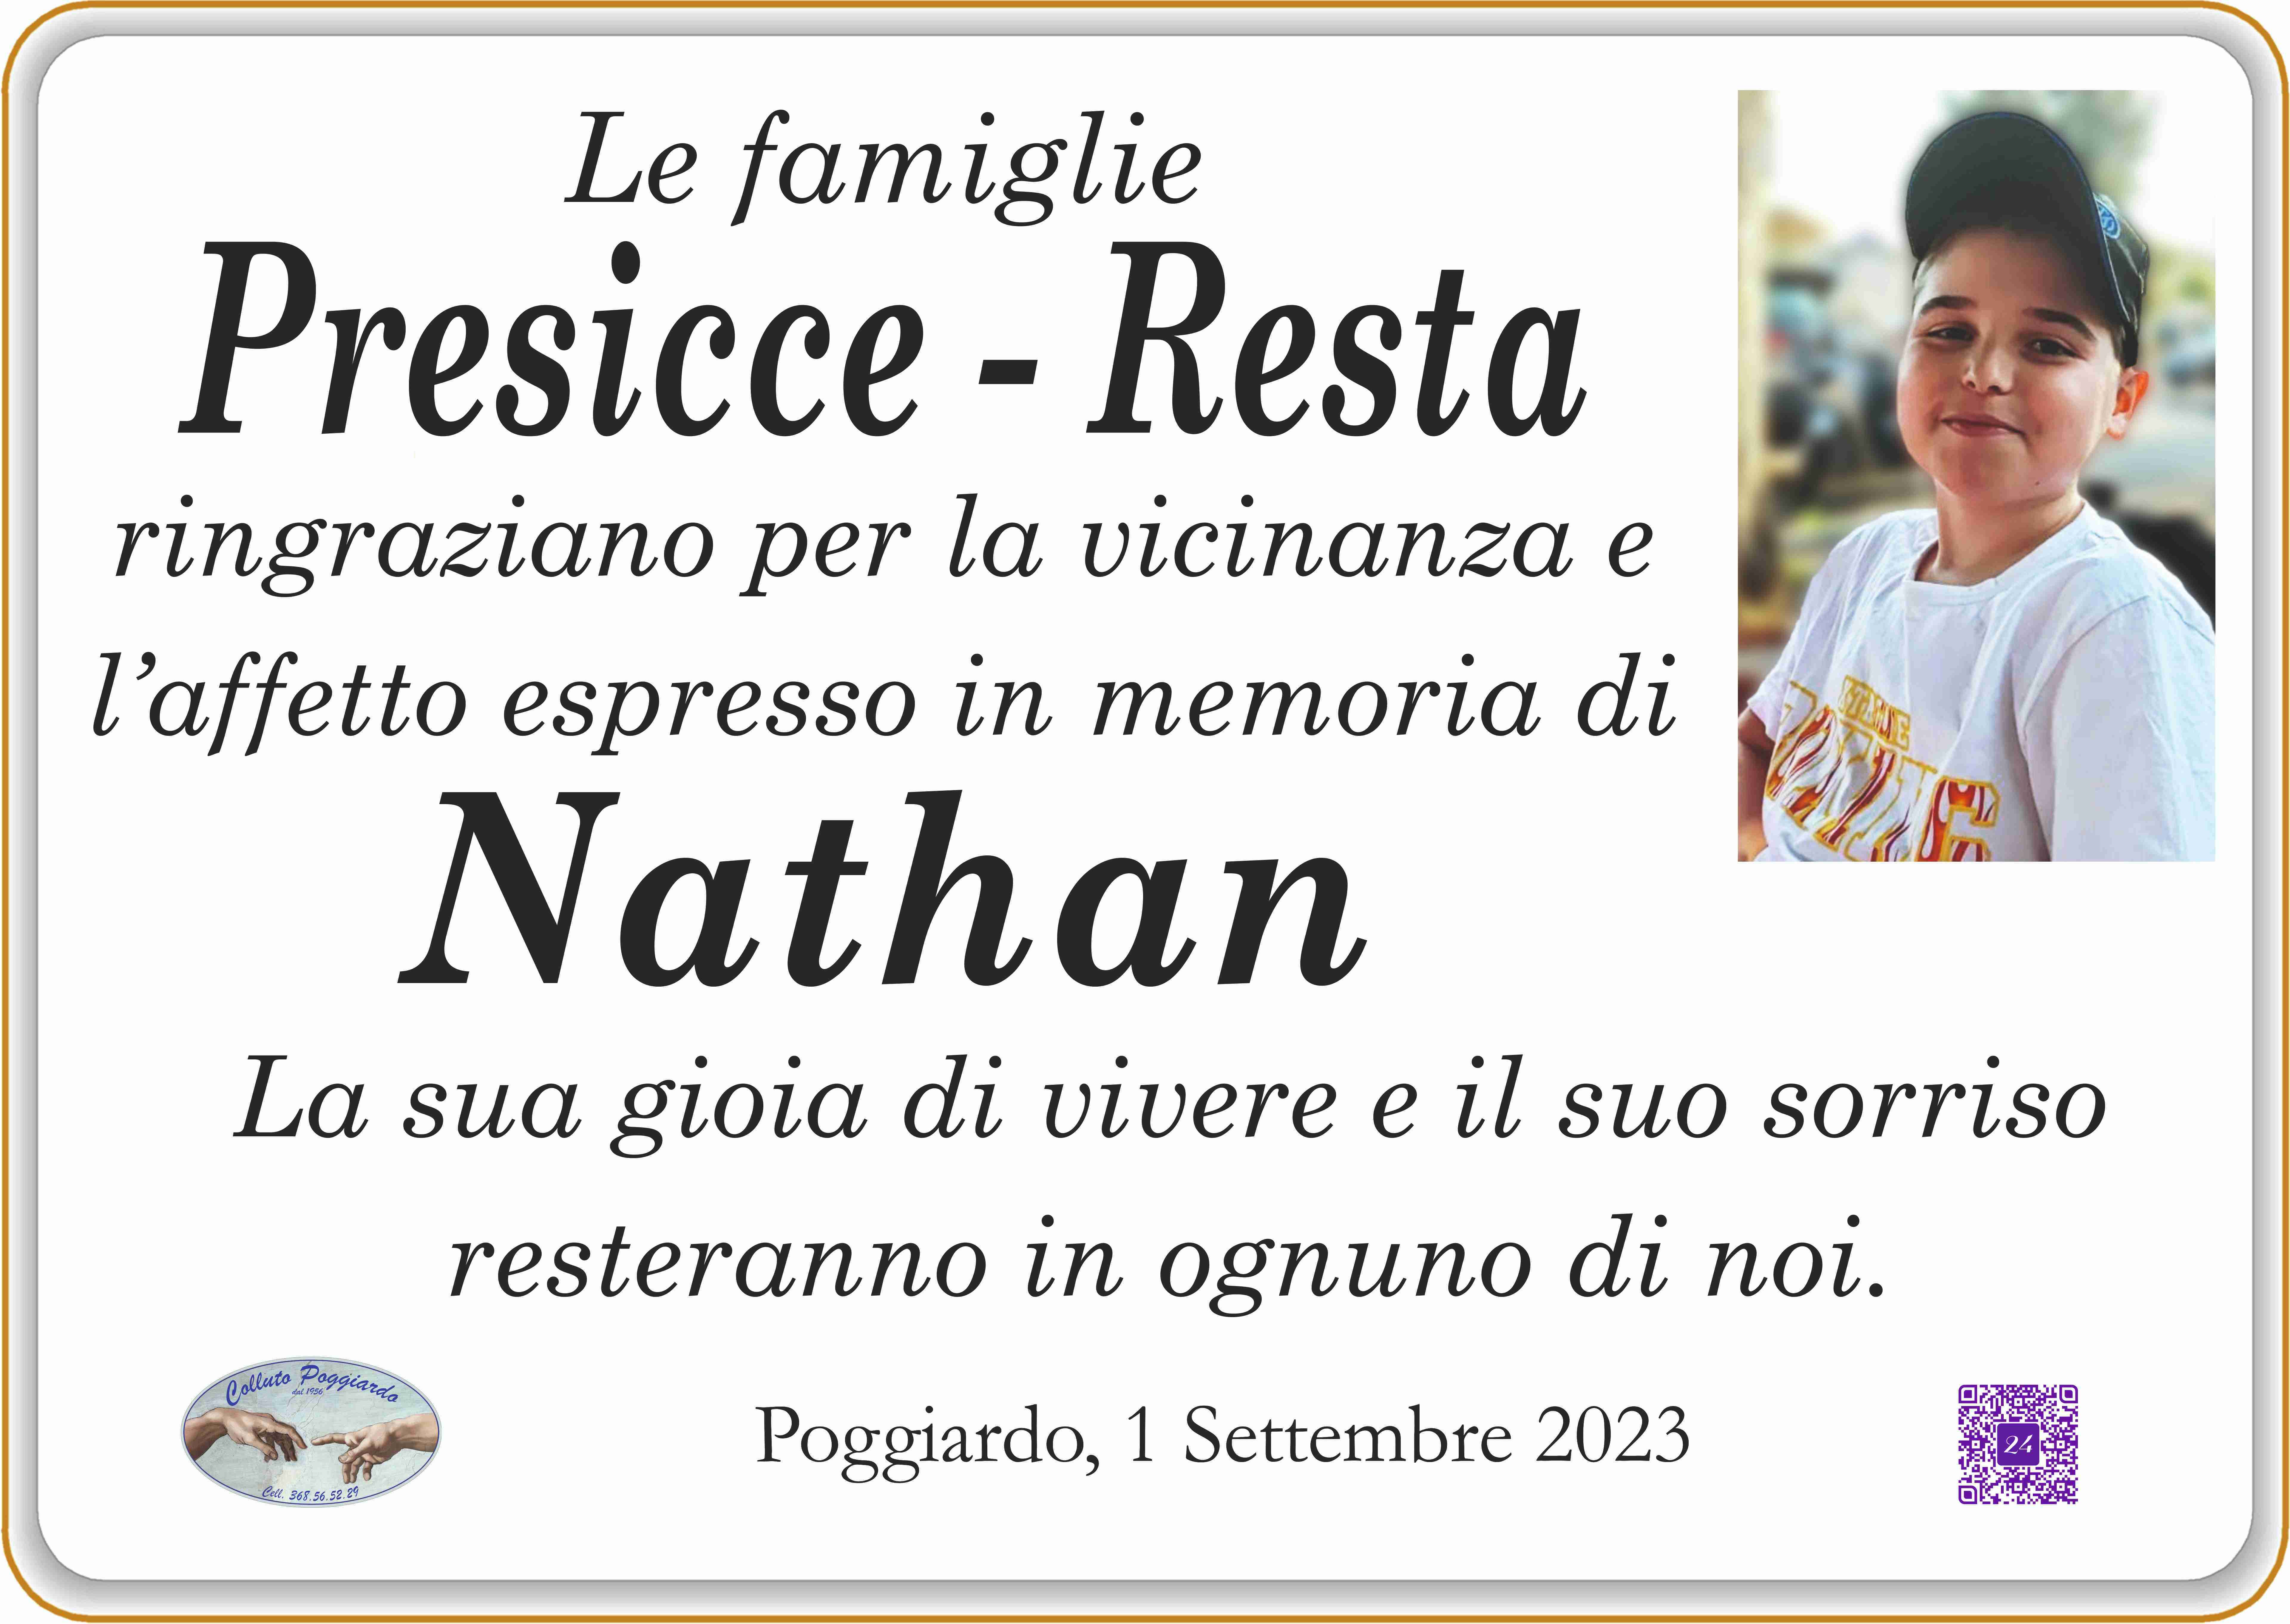 Nathan Presicce